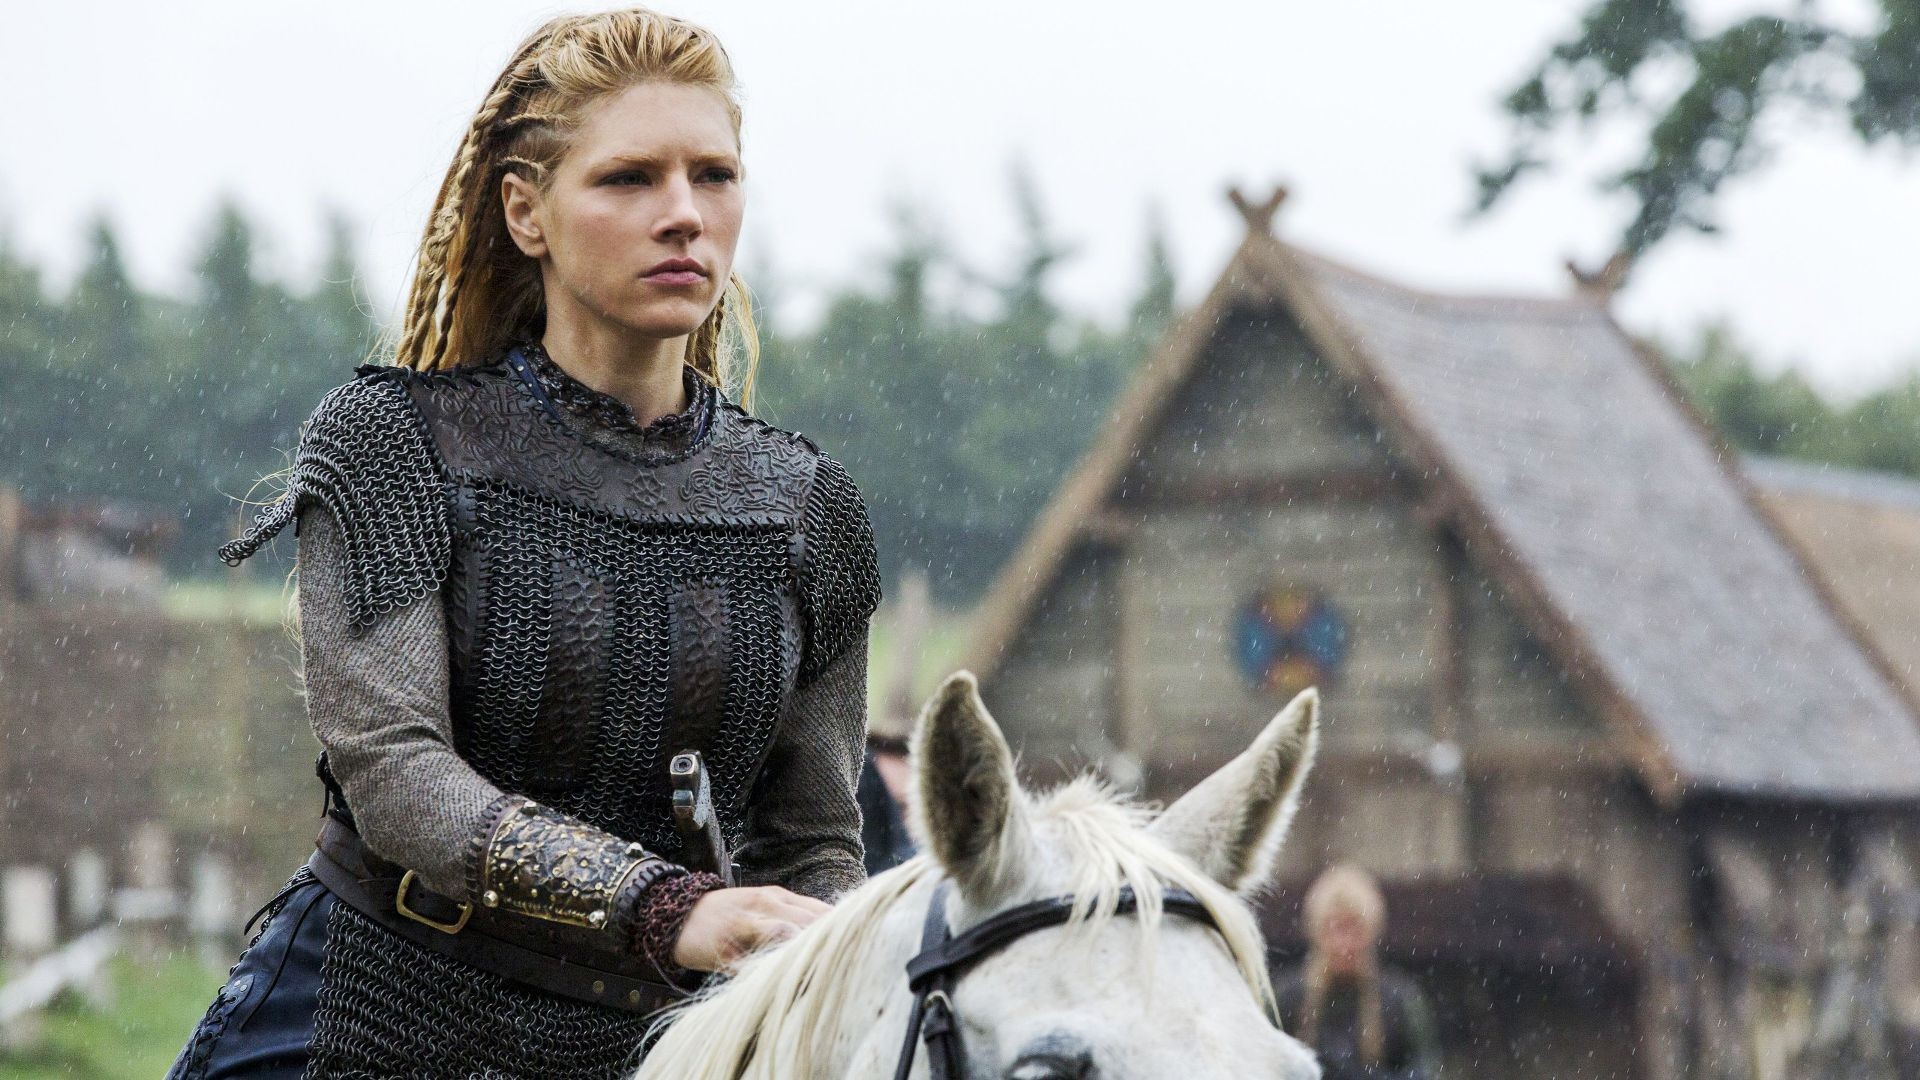 Vikings Lagertha Actress Vikings Season 5 Cast Members Undergo Physically Tough